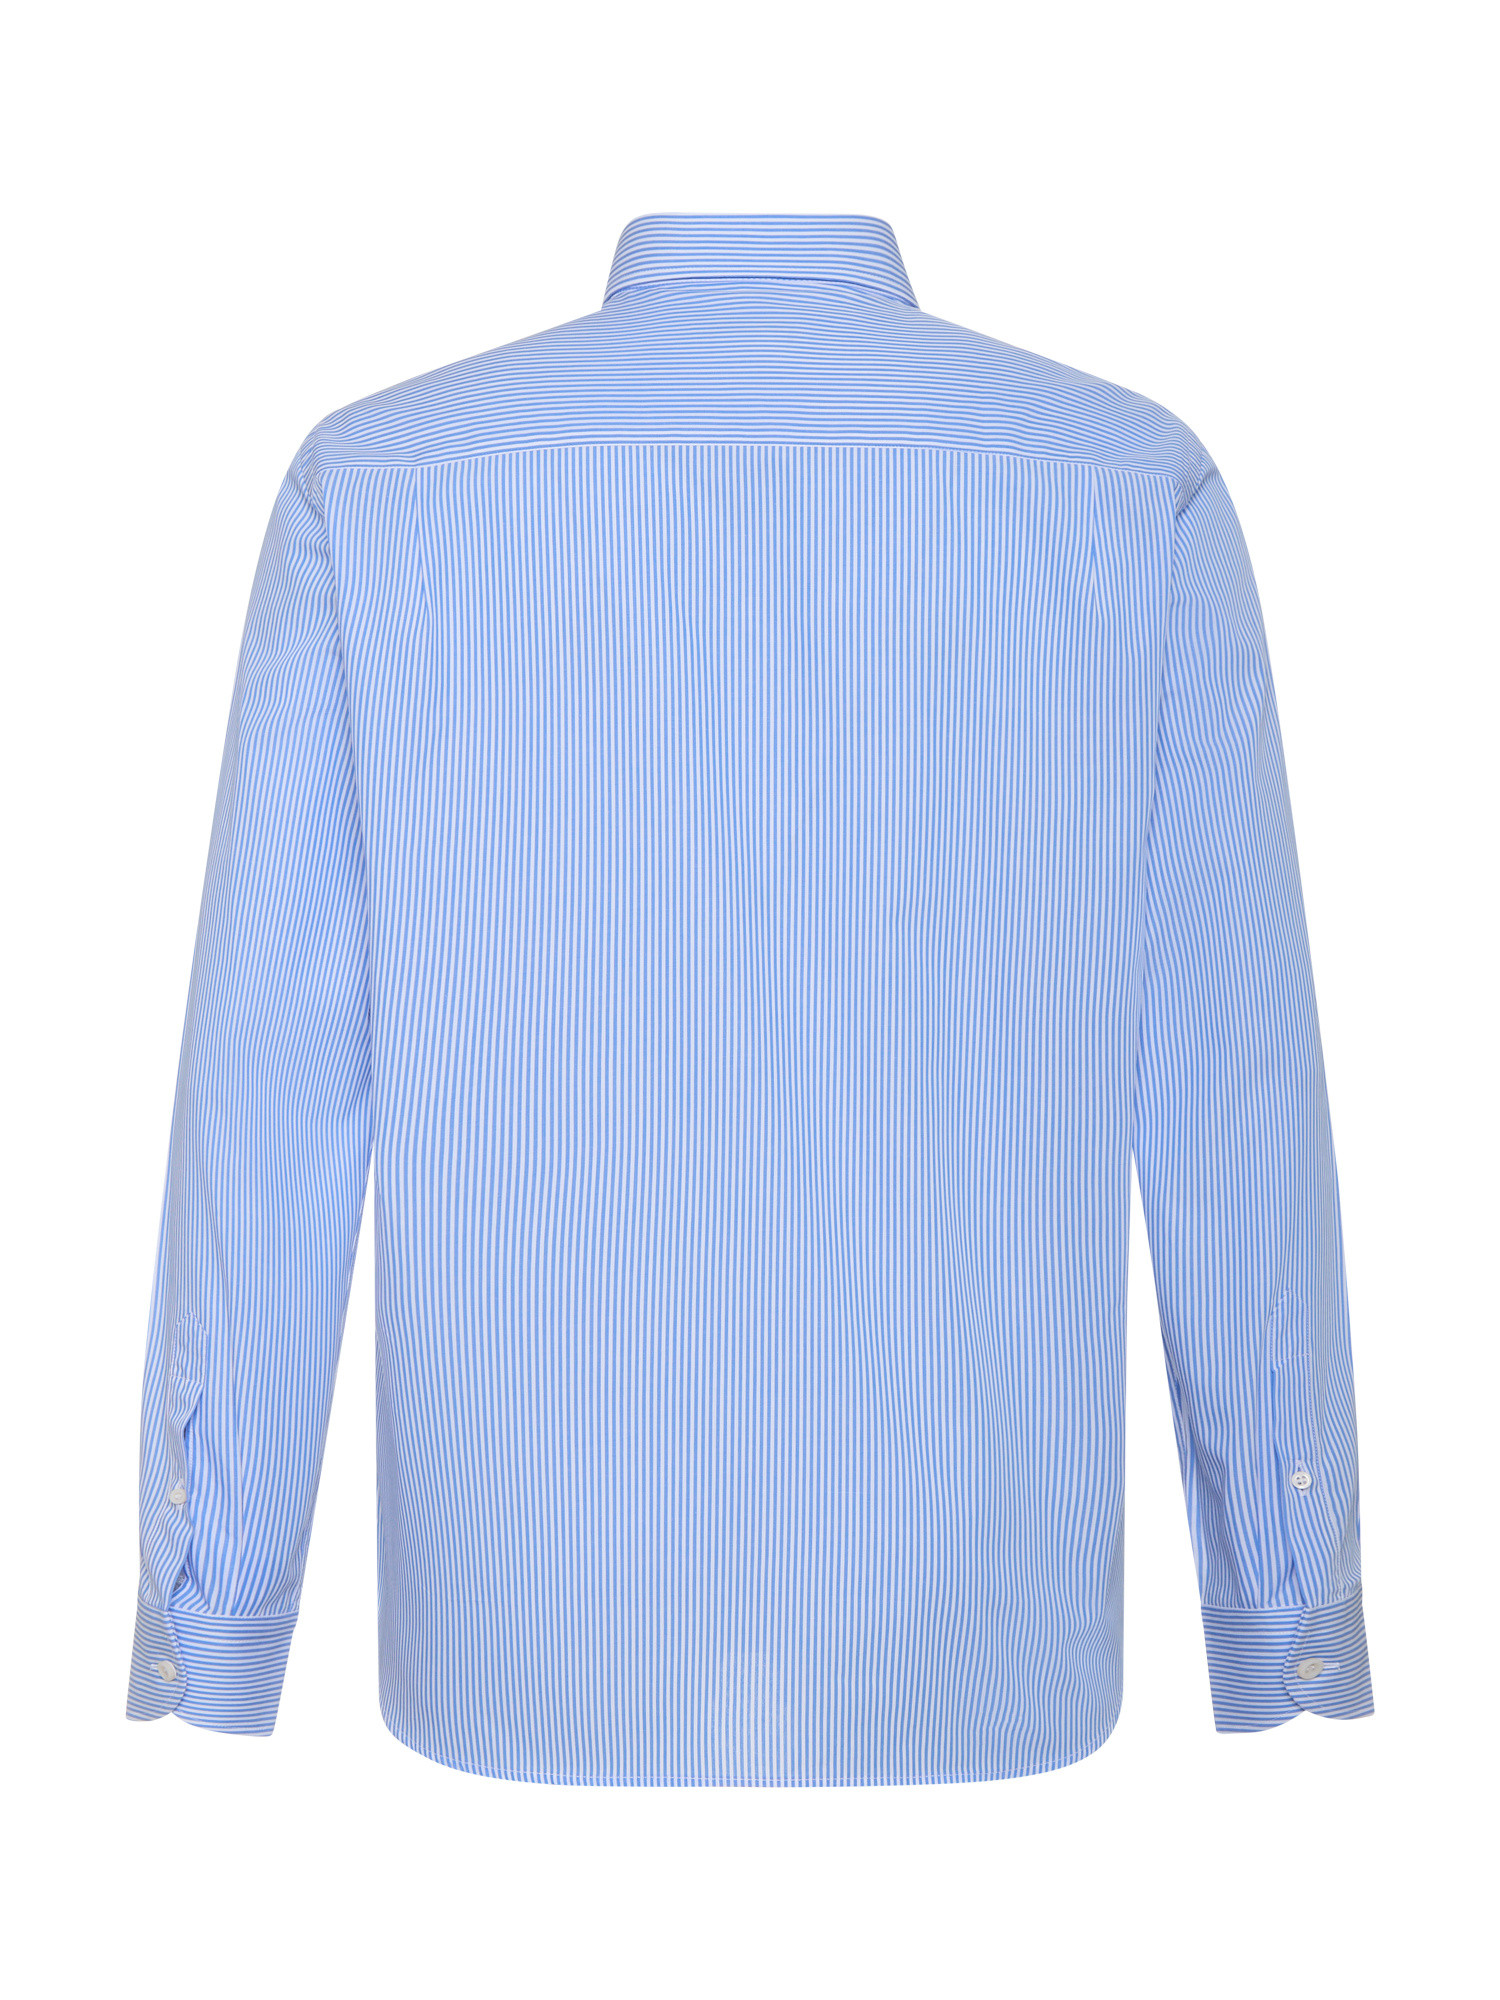 Luca D'Altieri - Camicia casual regular fit in popeline di puro cotone, Azzurro, large image number 2